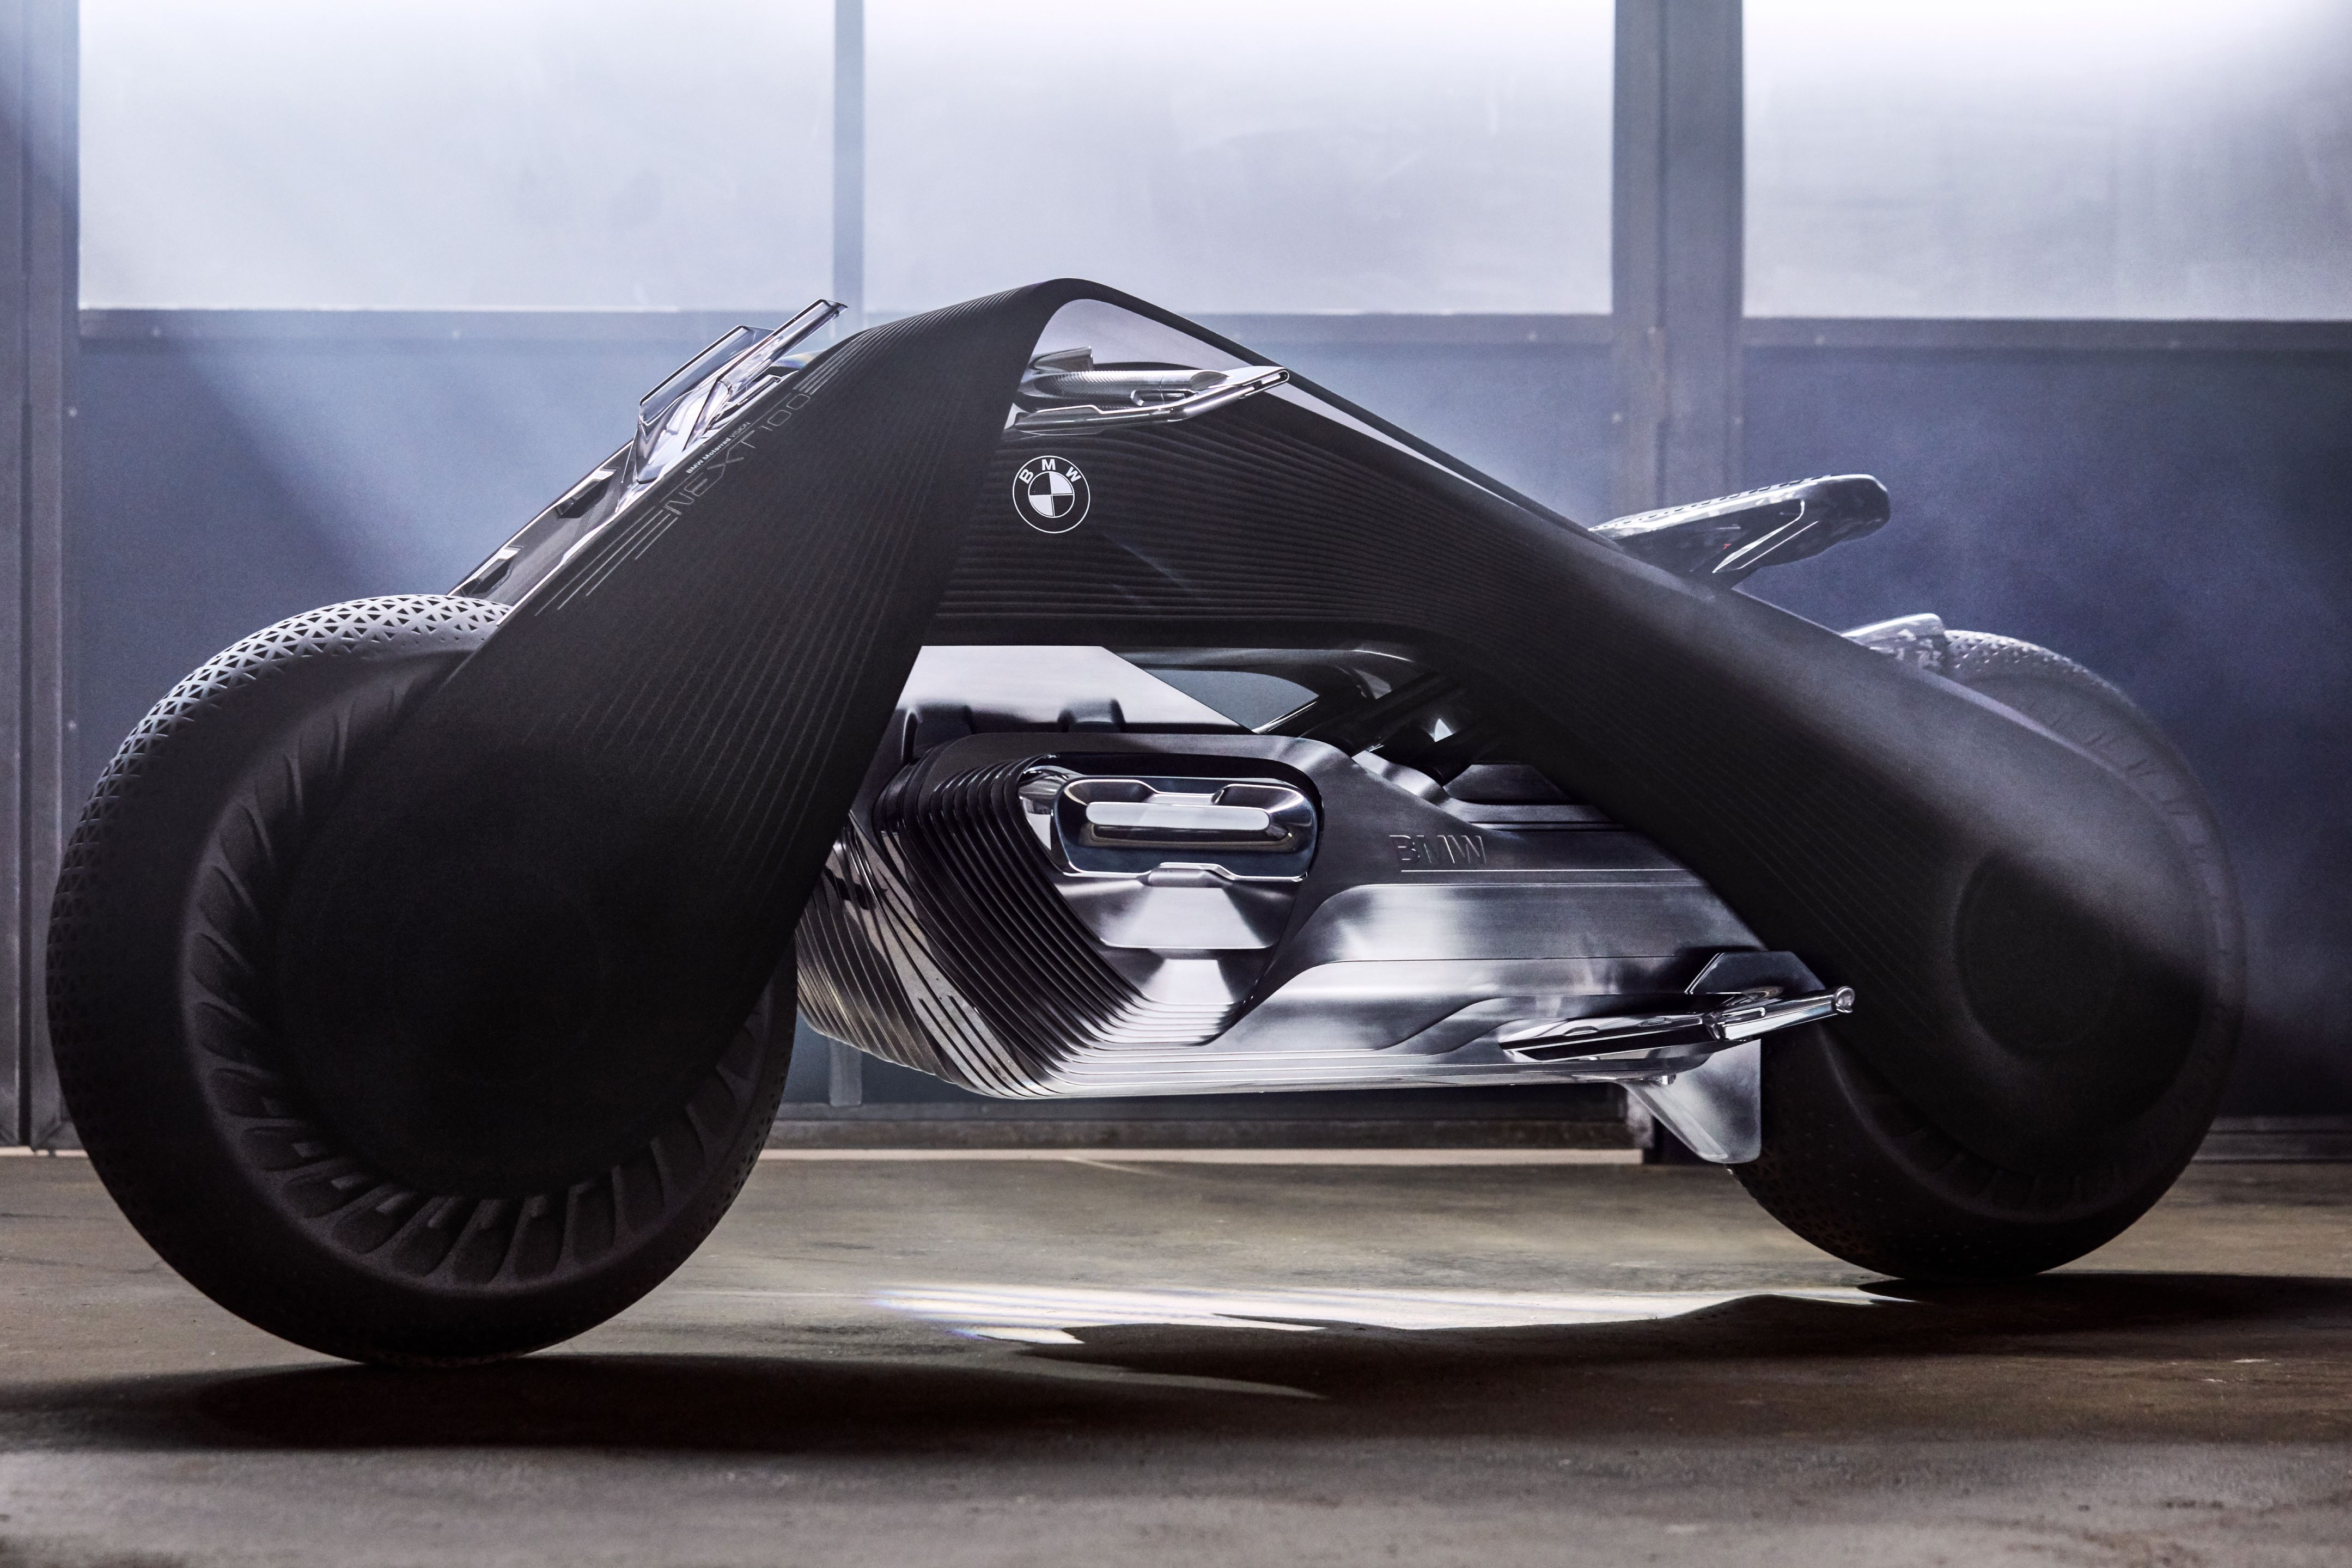 BMW Vision Next 100 concept bike